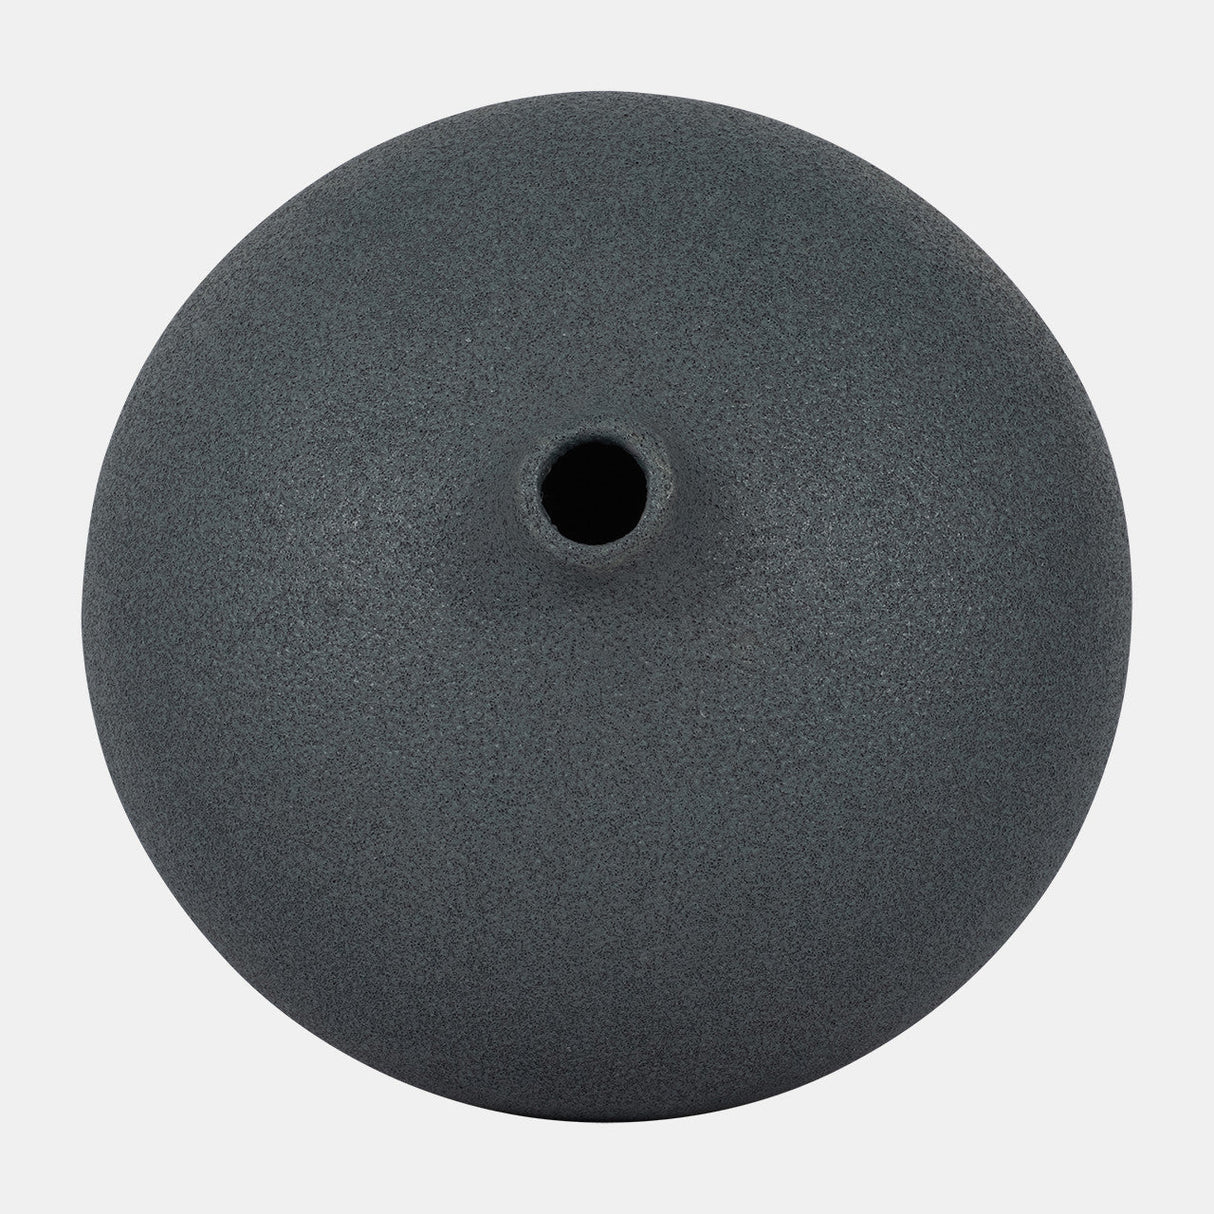 Cer, 5" Round Volcanic Vase, Denim Navy Blue